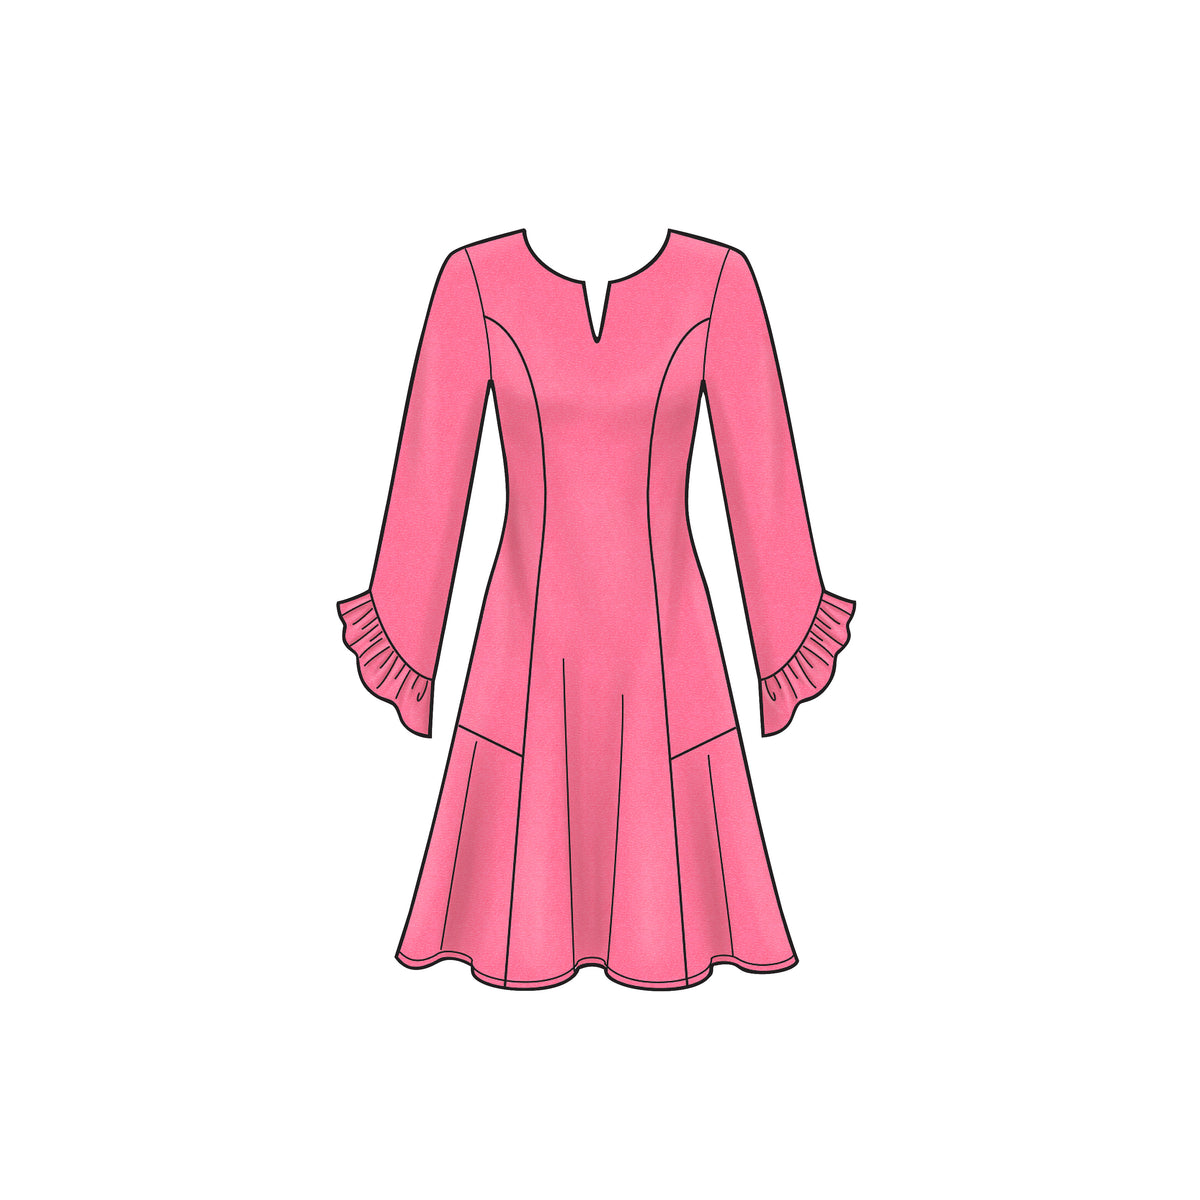 6635 New Look Sewing Pattern N6635 Misses' Princess Seamed Dresses